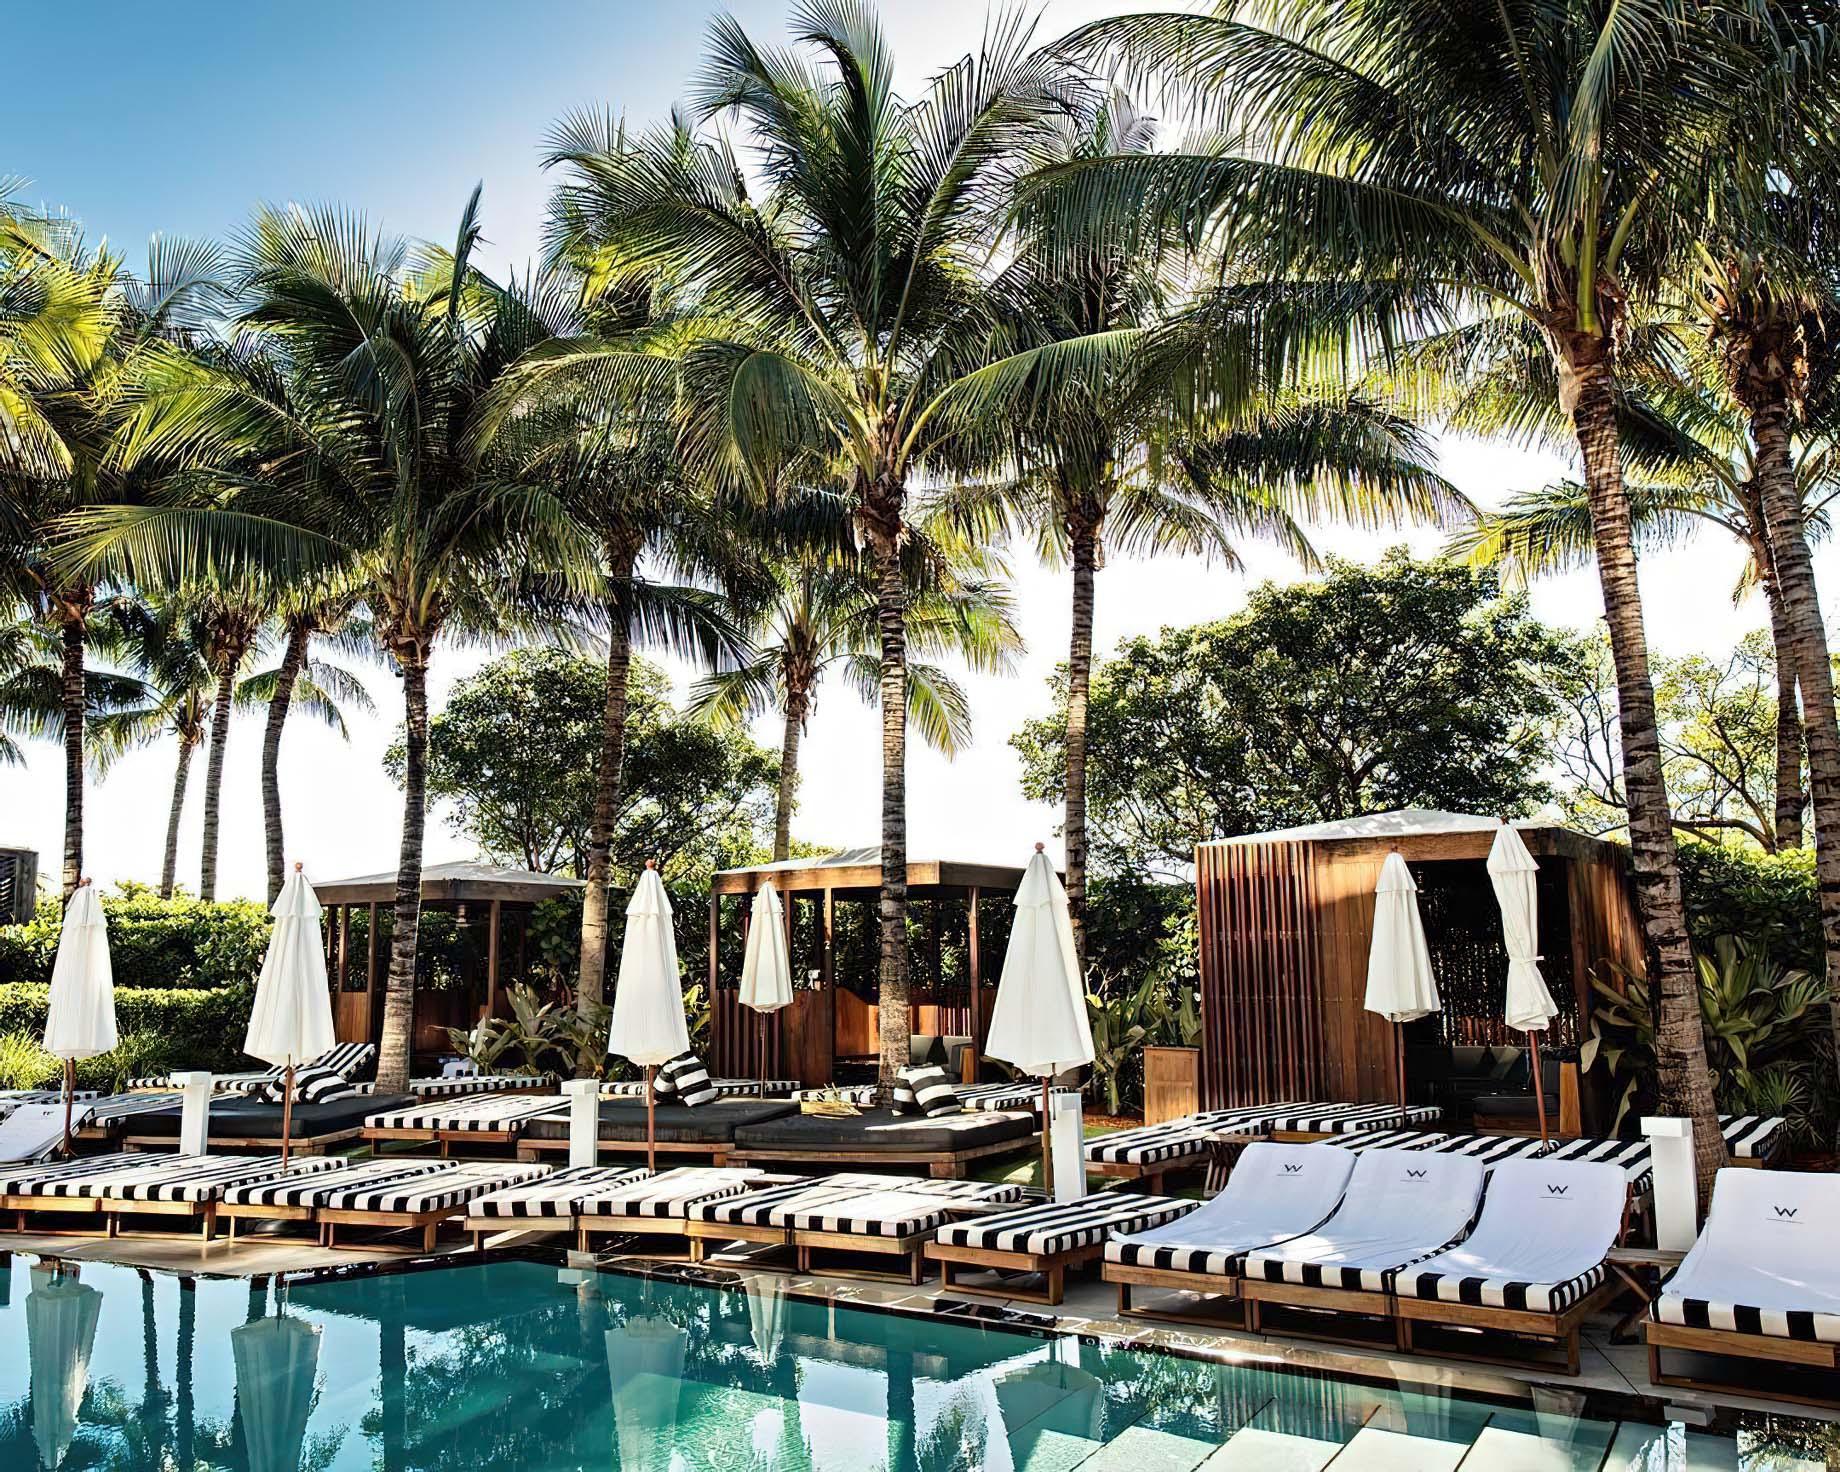 W South Beach Hotel - Miami Beach, FL, USA - Pool and Palm Trees